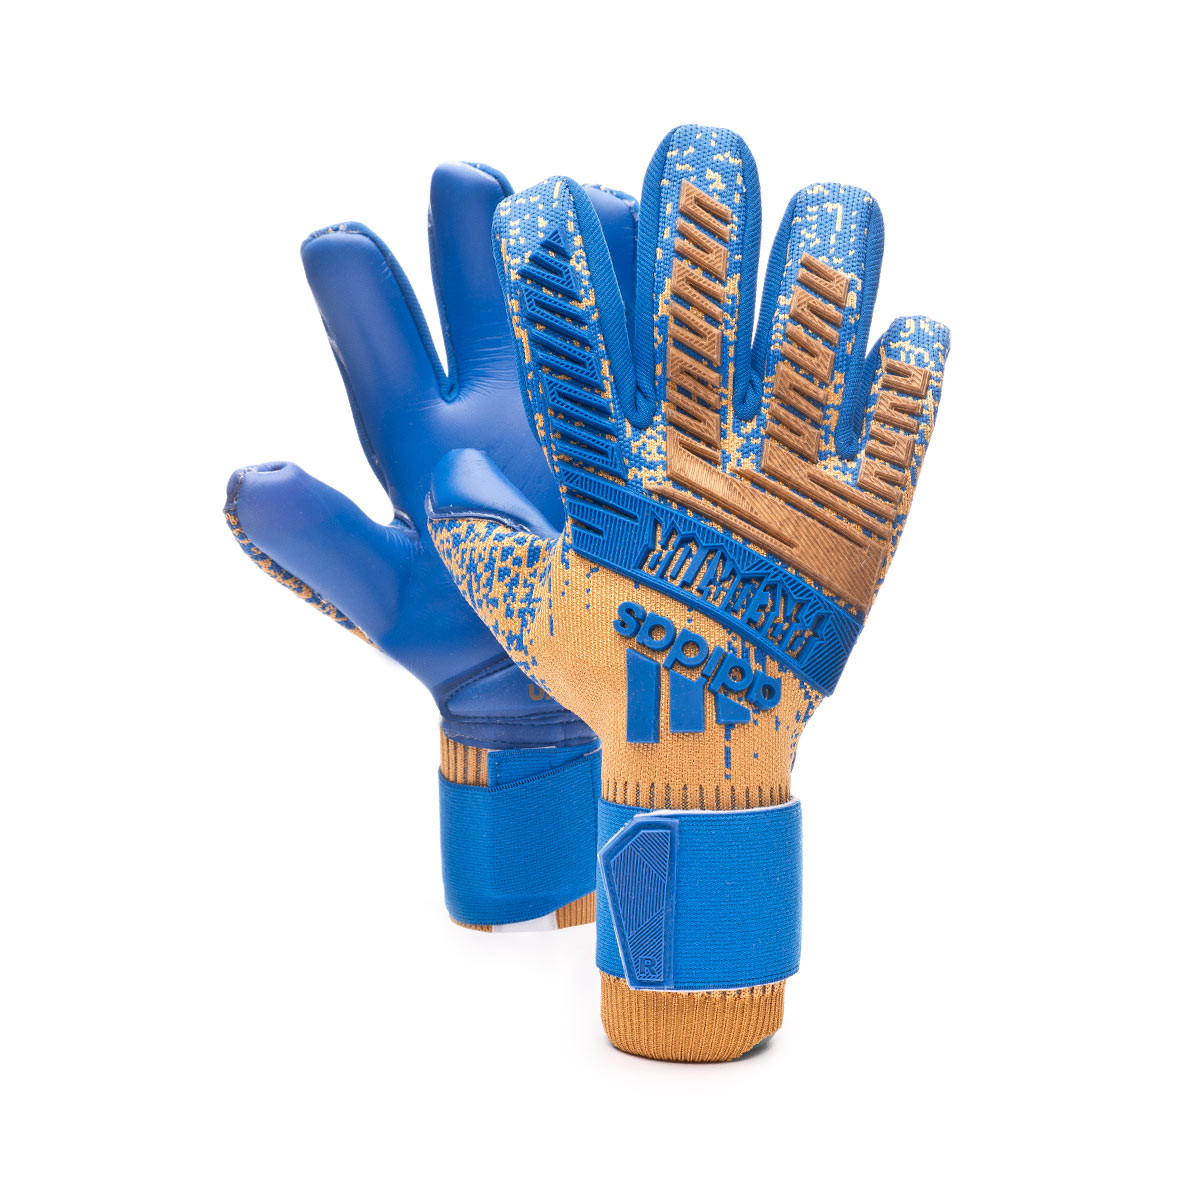 predator football gloves